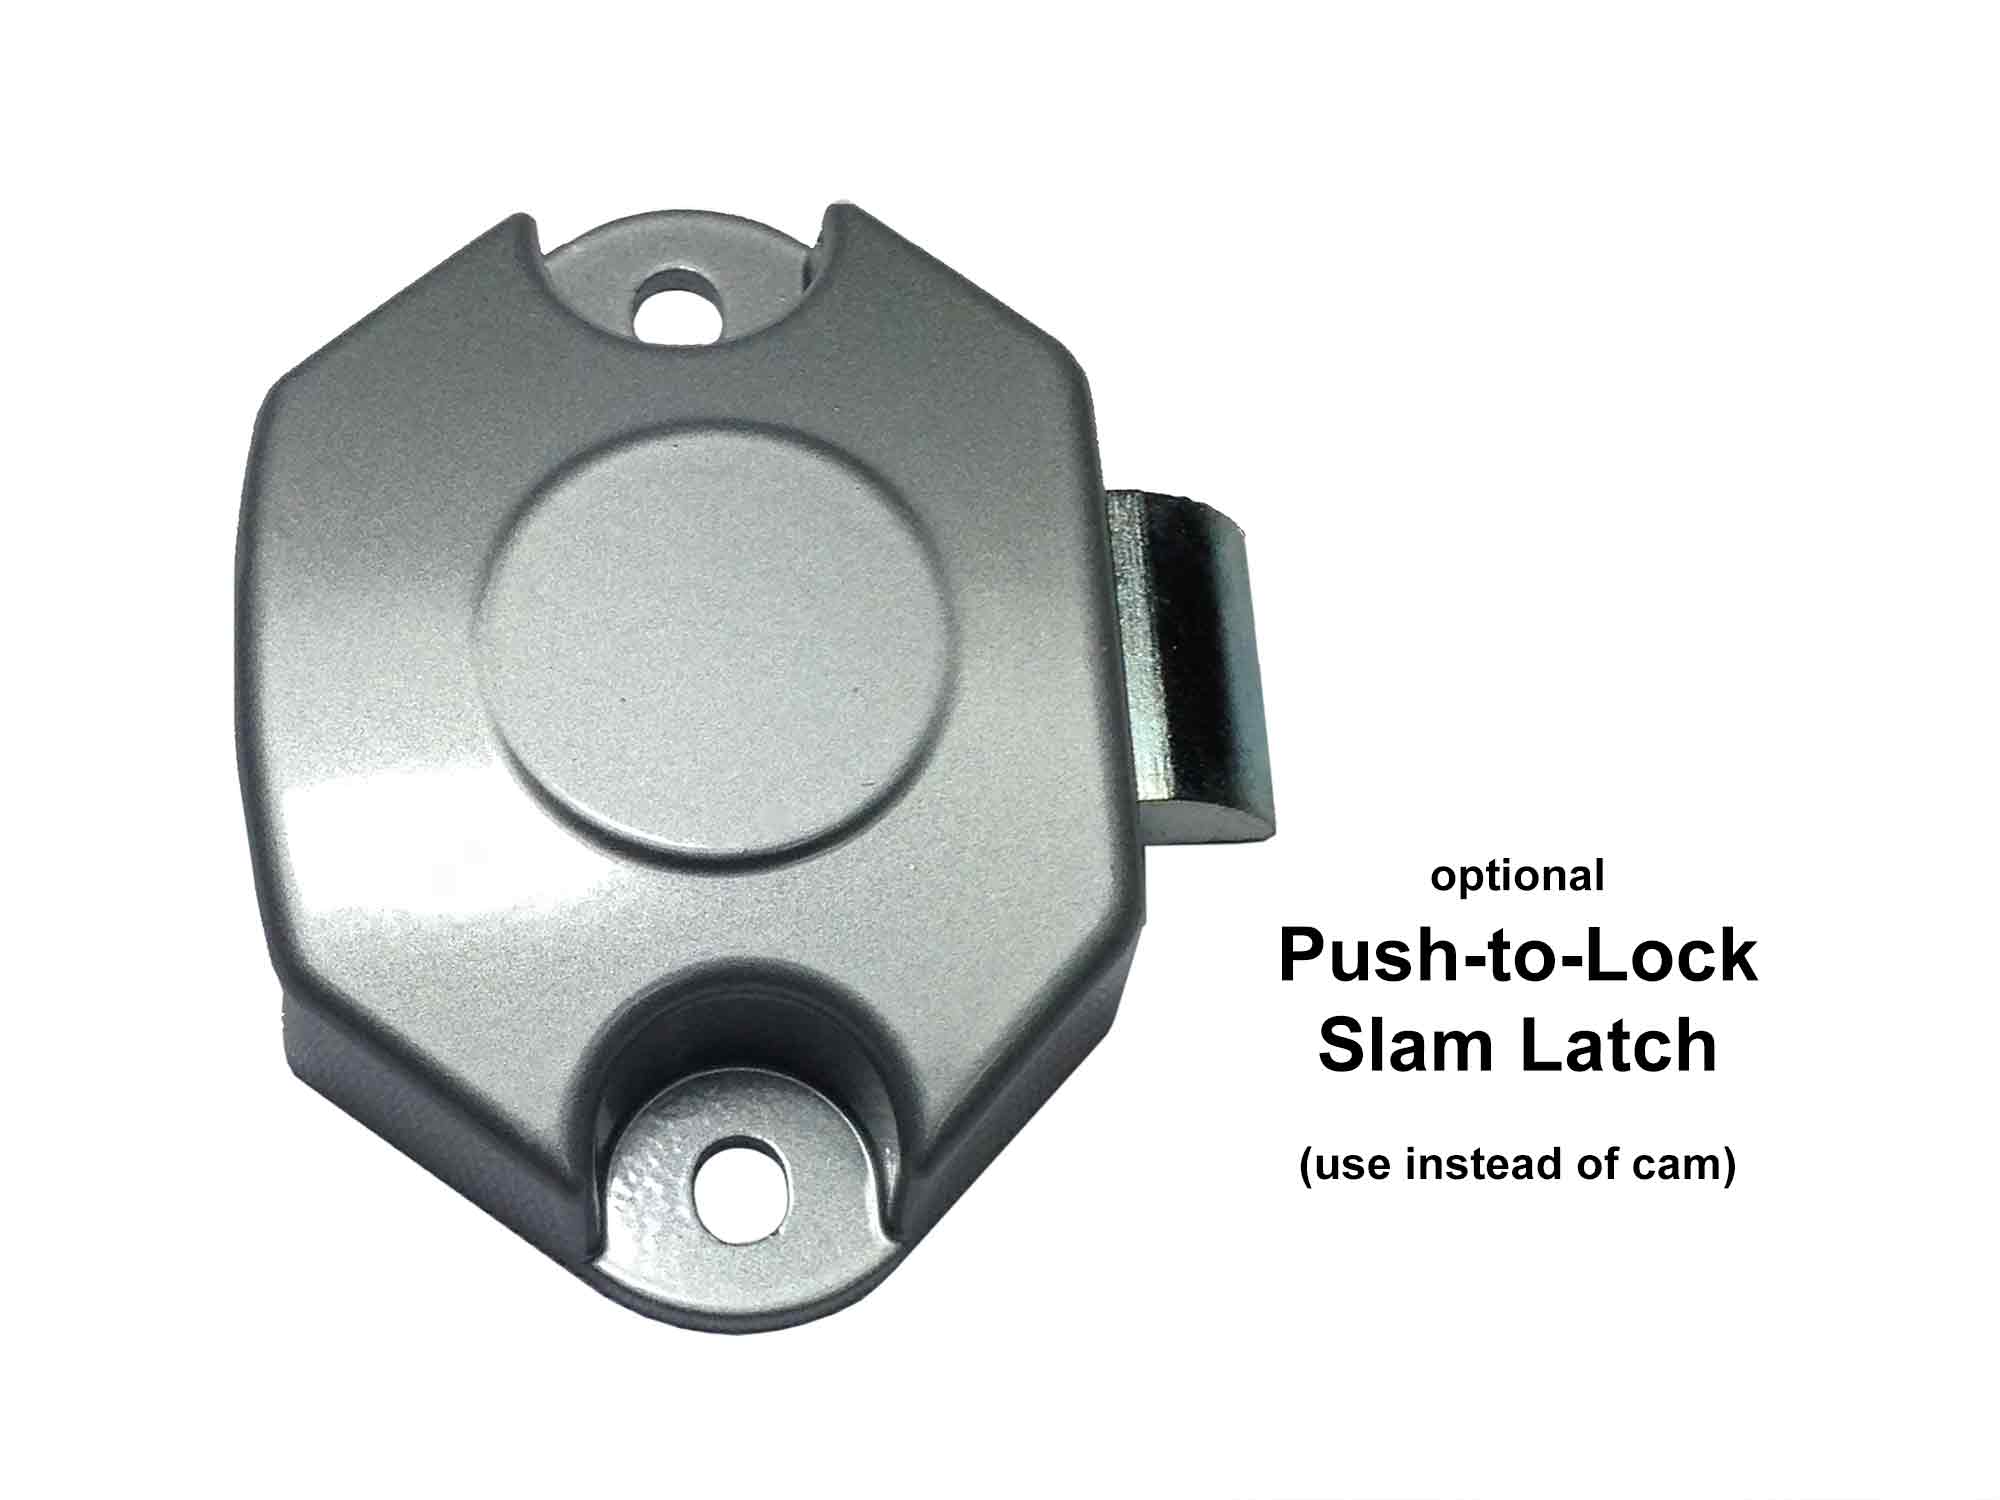 Lockey EC780 Standard Cabinet/Locker Cam Lock